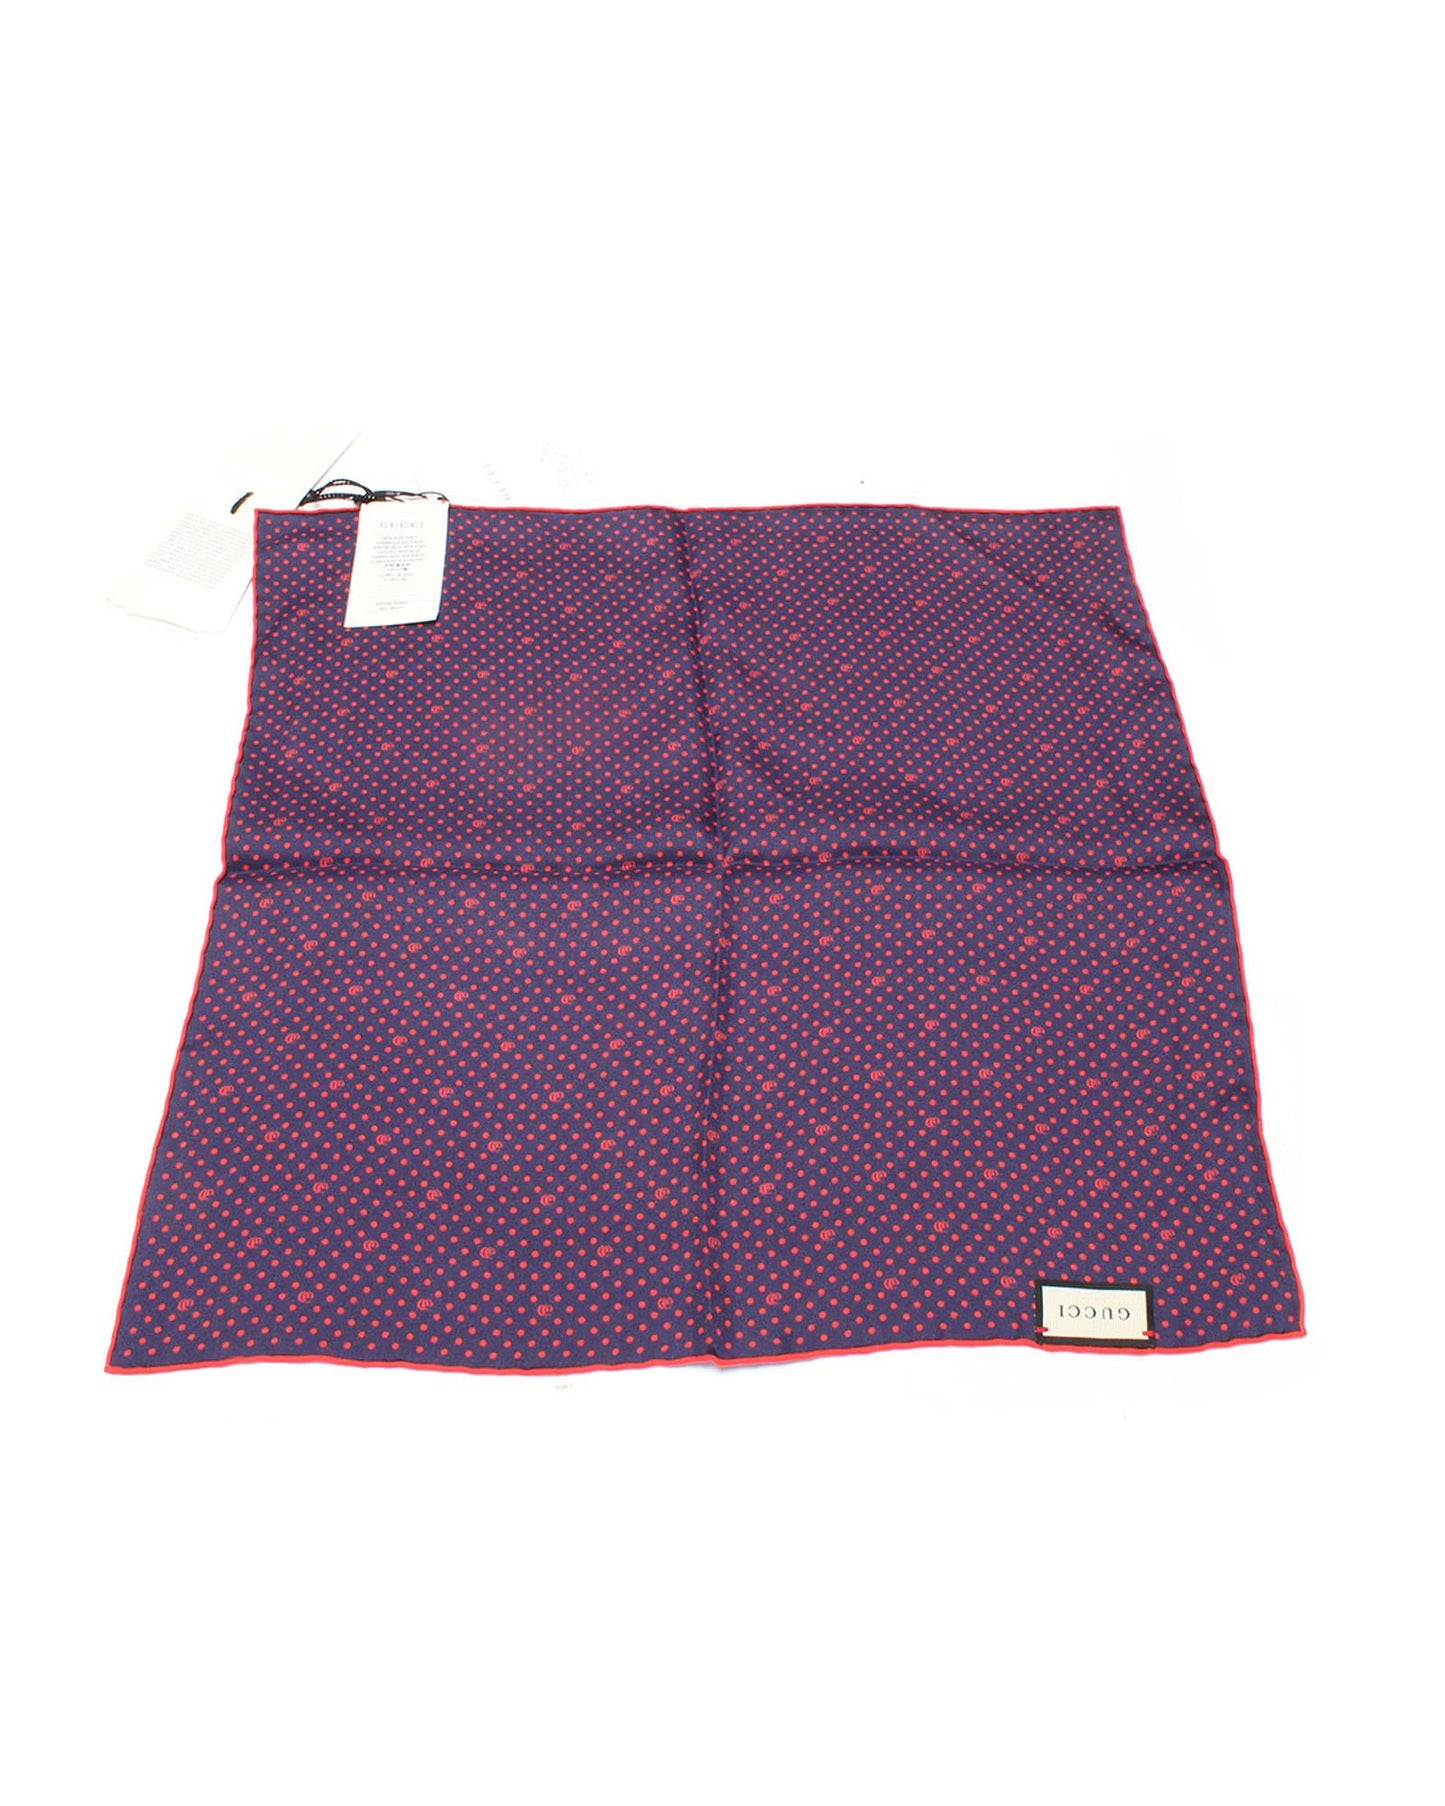 Gucci Women's Polka Dot Pocket Square Scarf in Purple